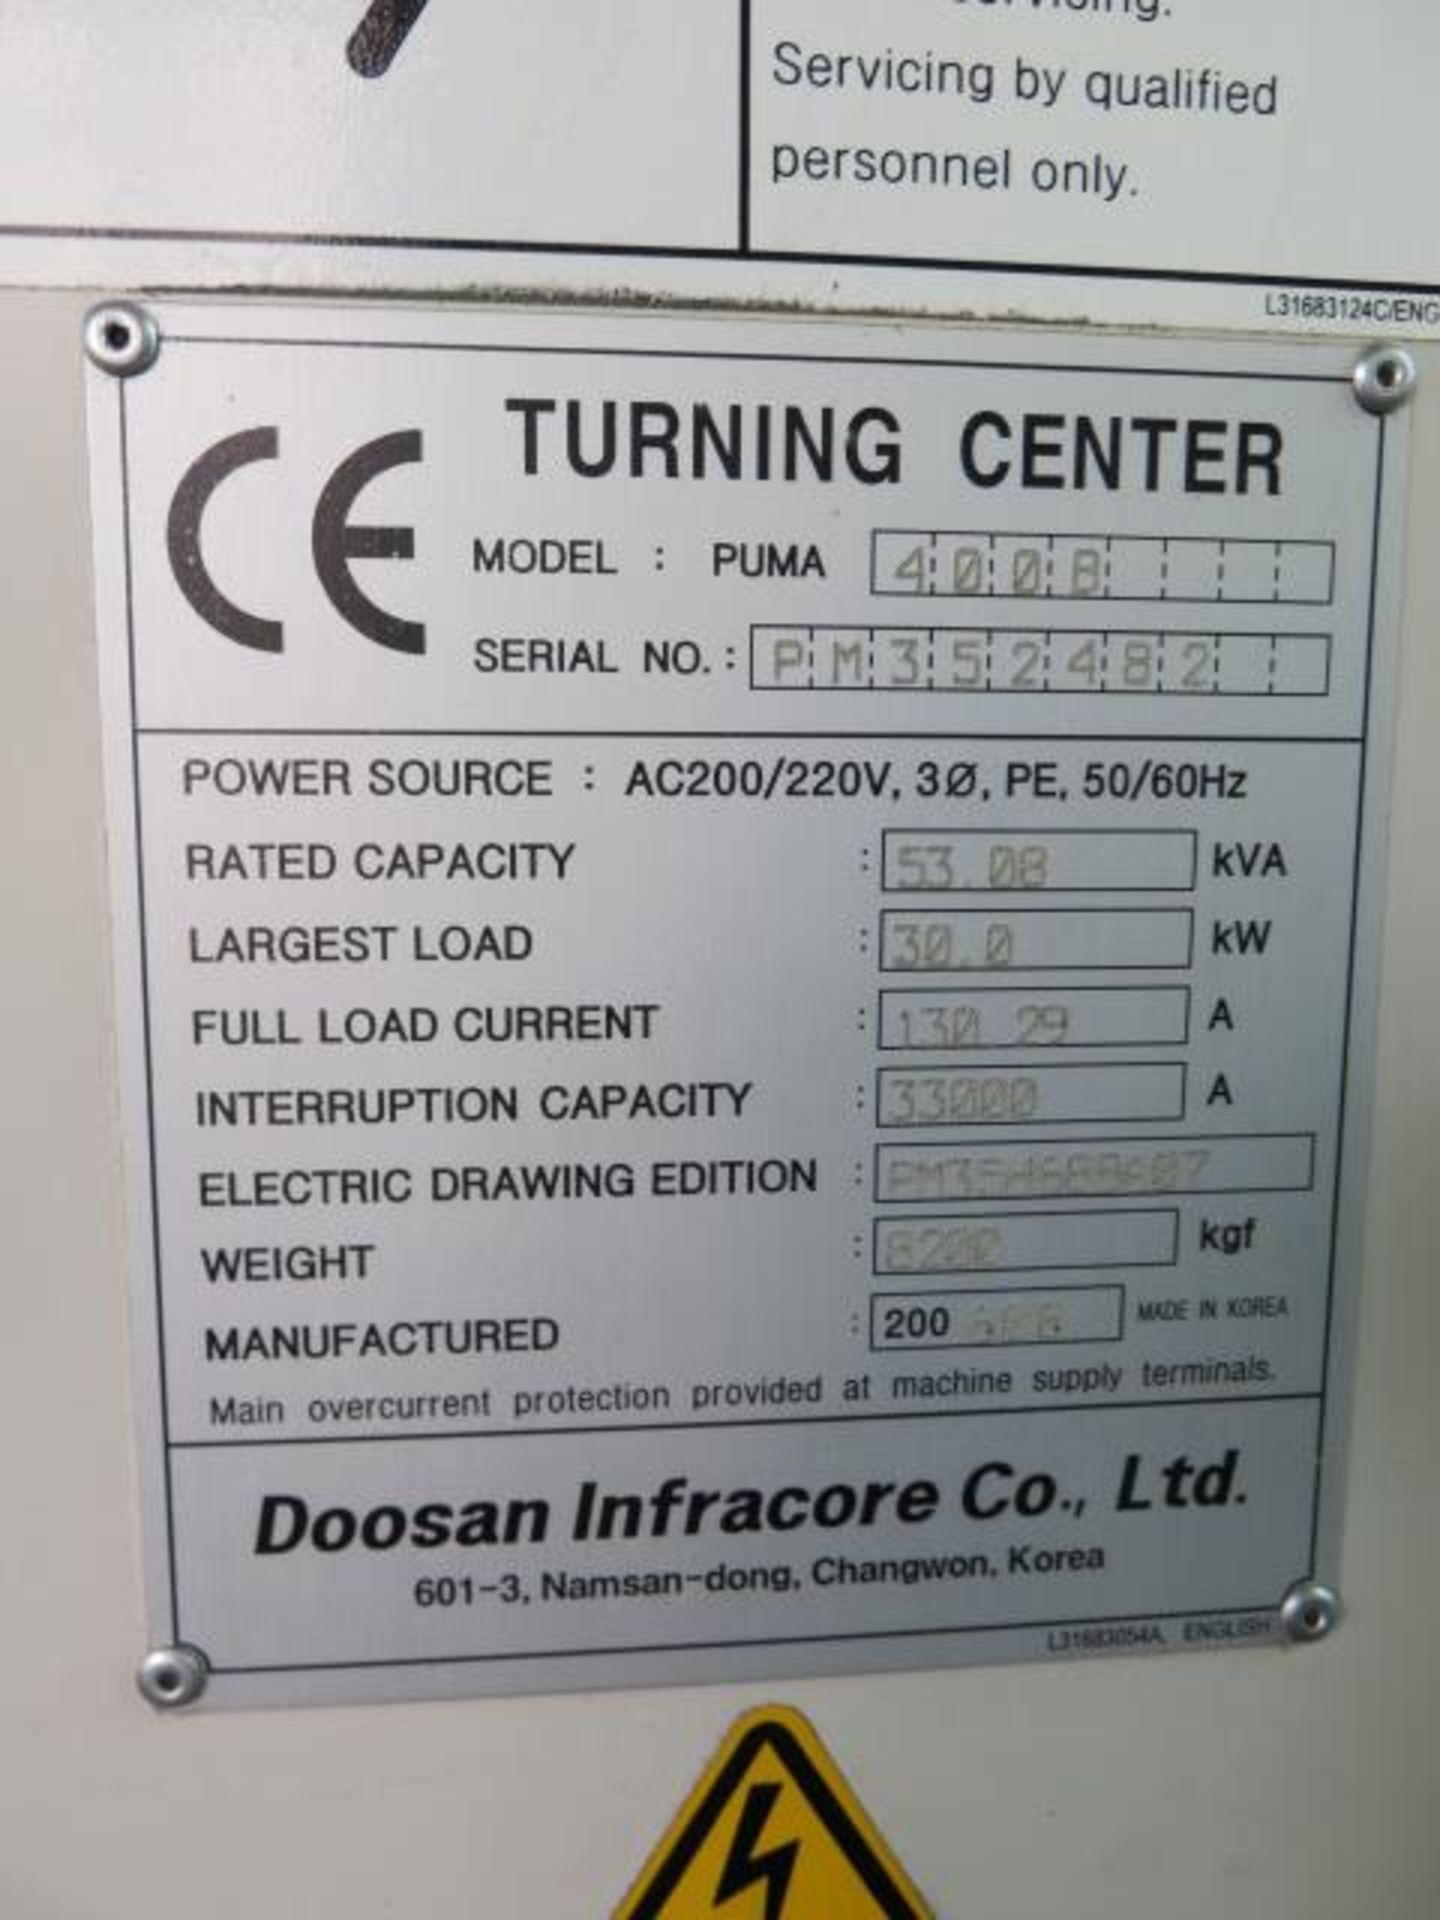 2006 Doosan Daewoo PUMA 400B CNC Turning Center s/n PM352482 w/ Fanuc 21i-TB Controls, SOLD AS IS - Image 15 of 15